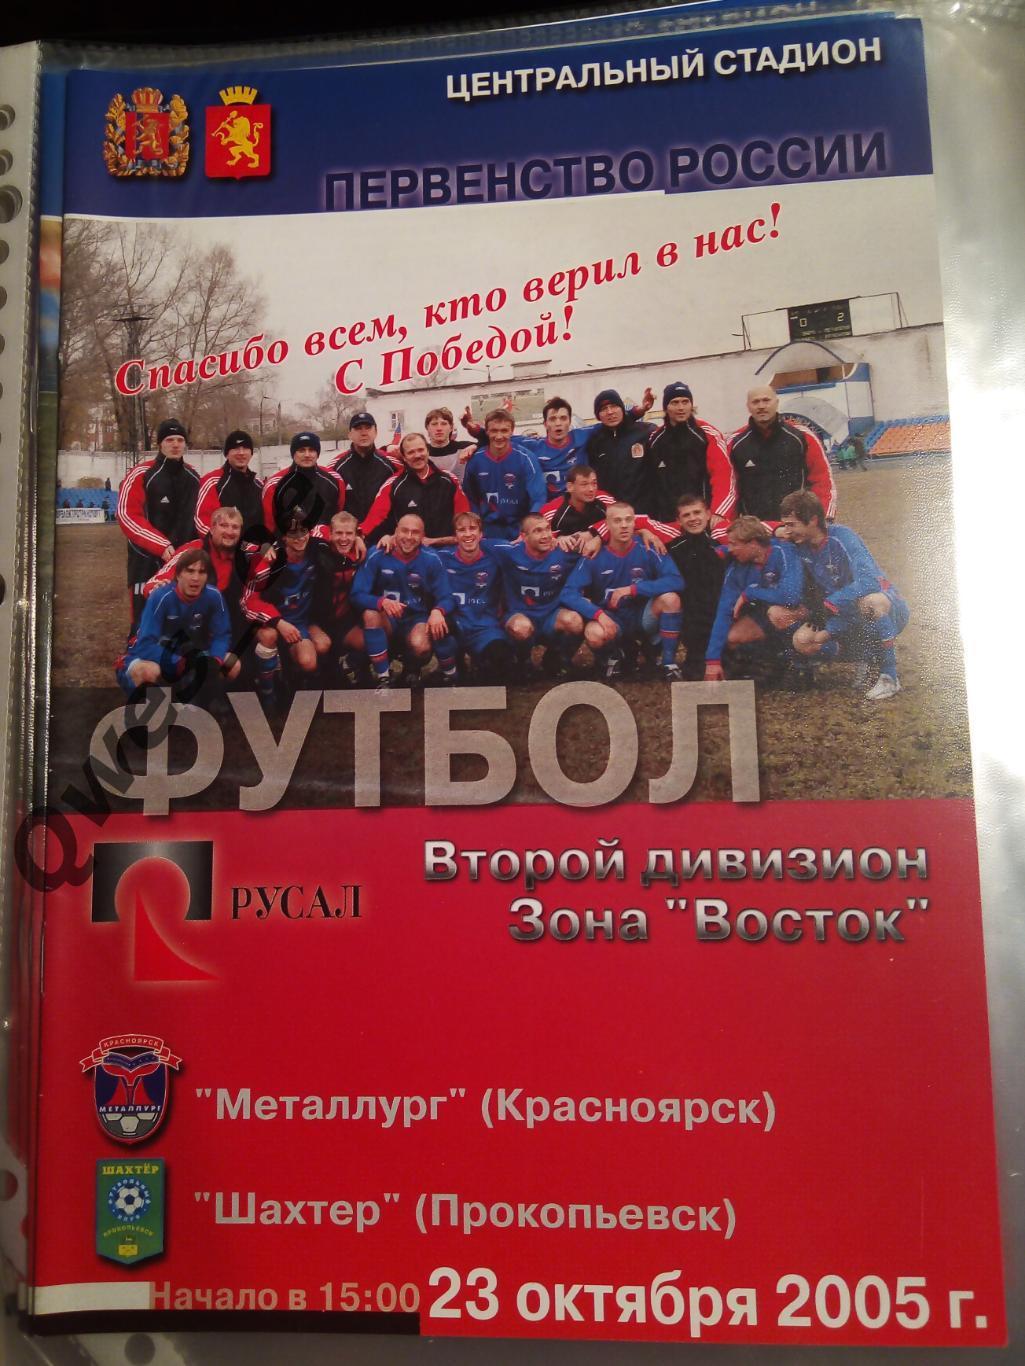 Металлург Красноярск - Шахтер Прокопьевск 23 октября 2005